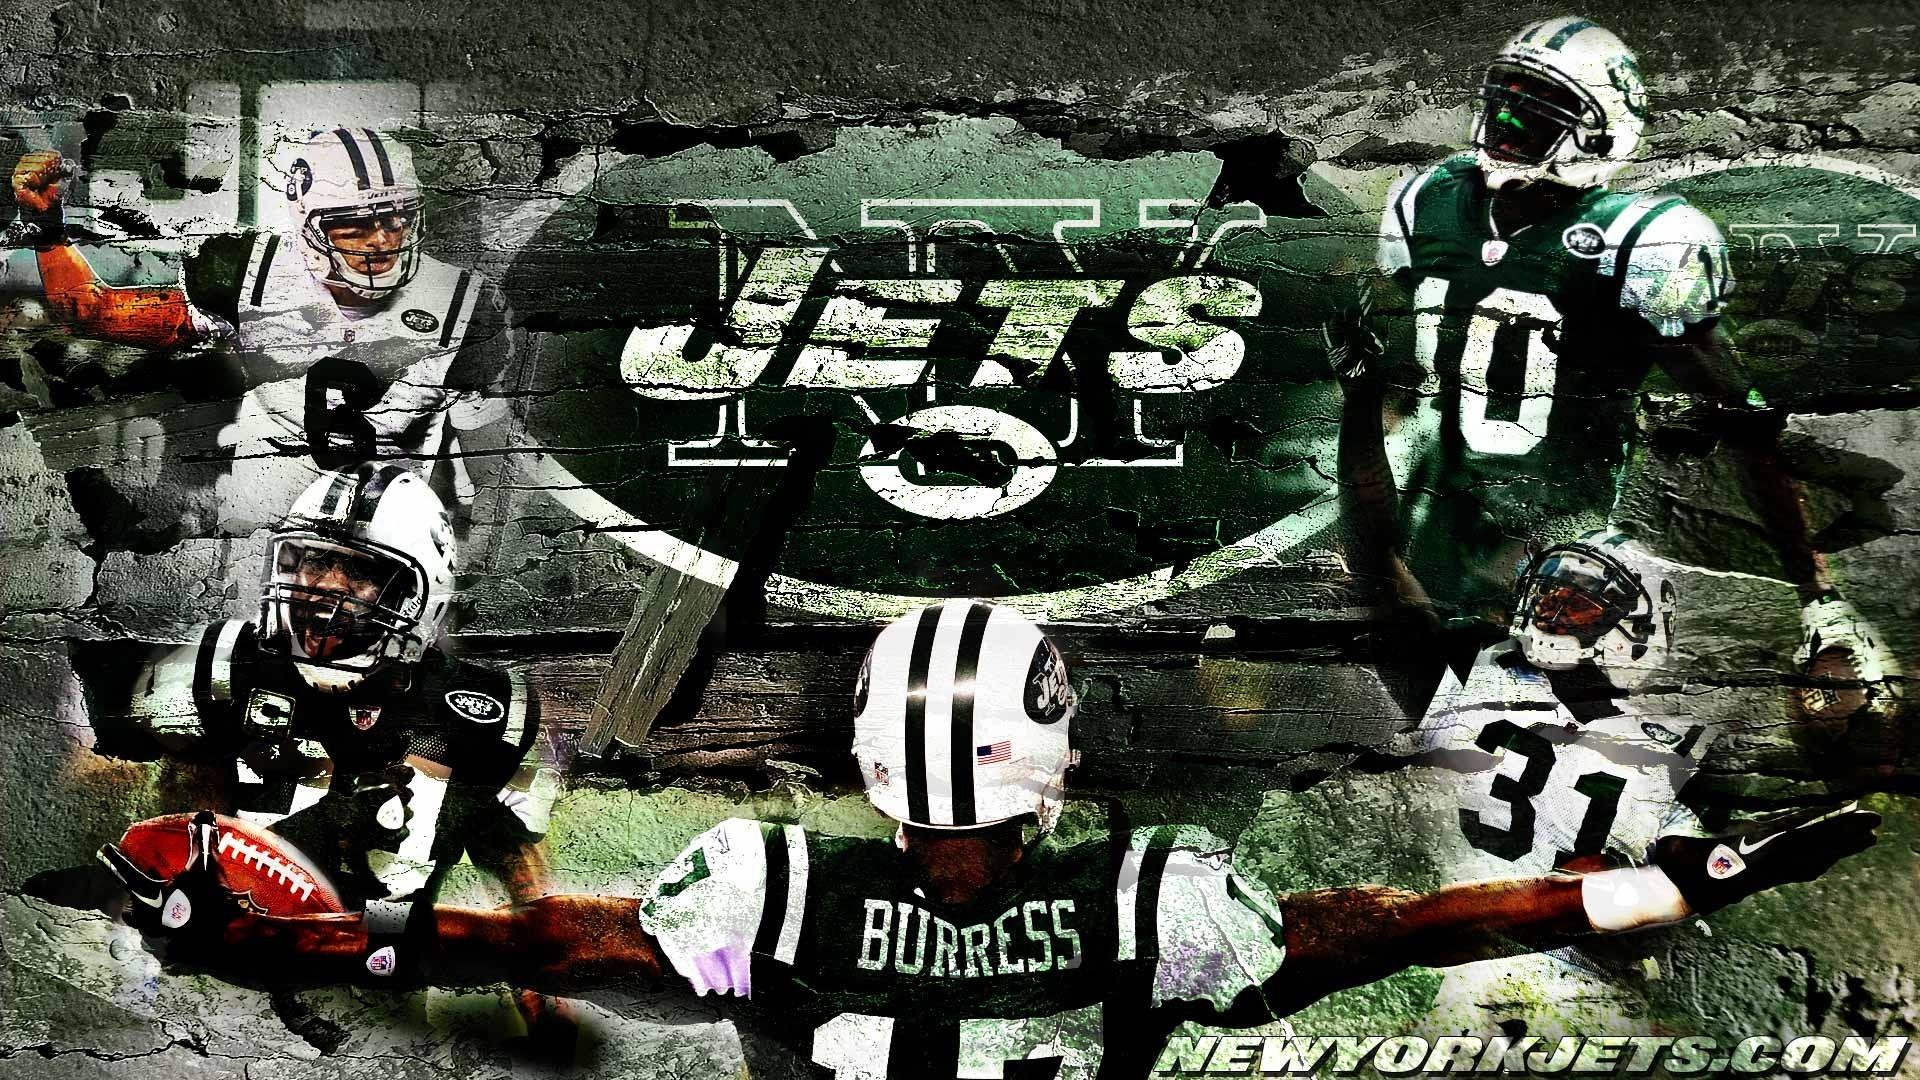 New York Jets Wallpaper